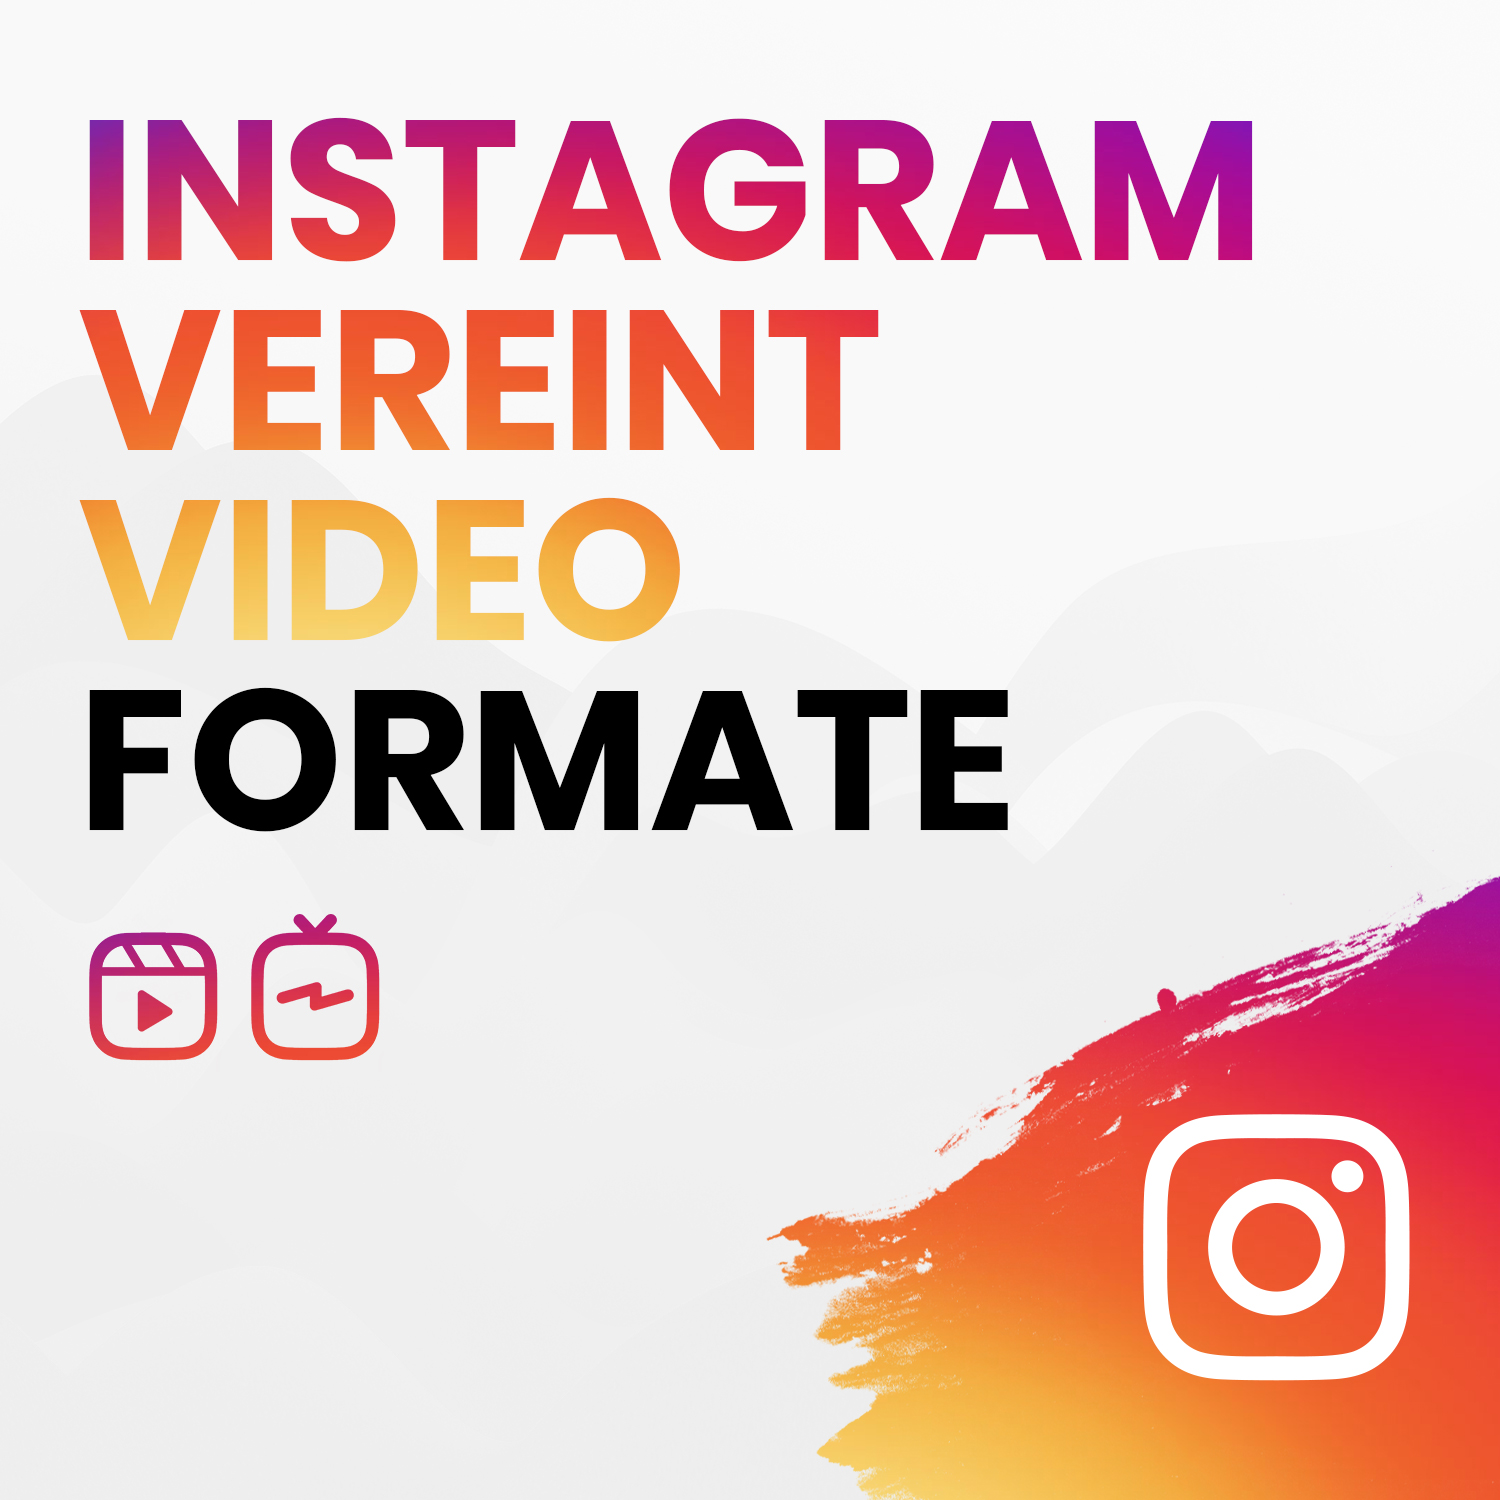 Instagram vereint Video-Formate